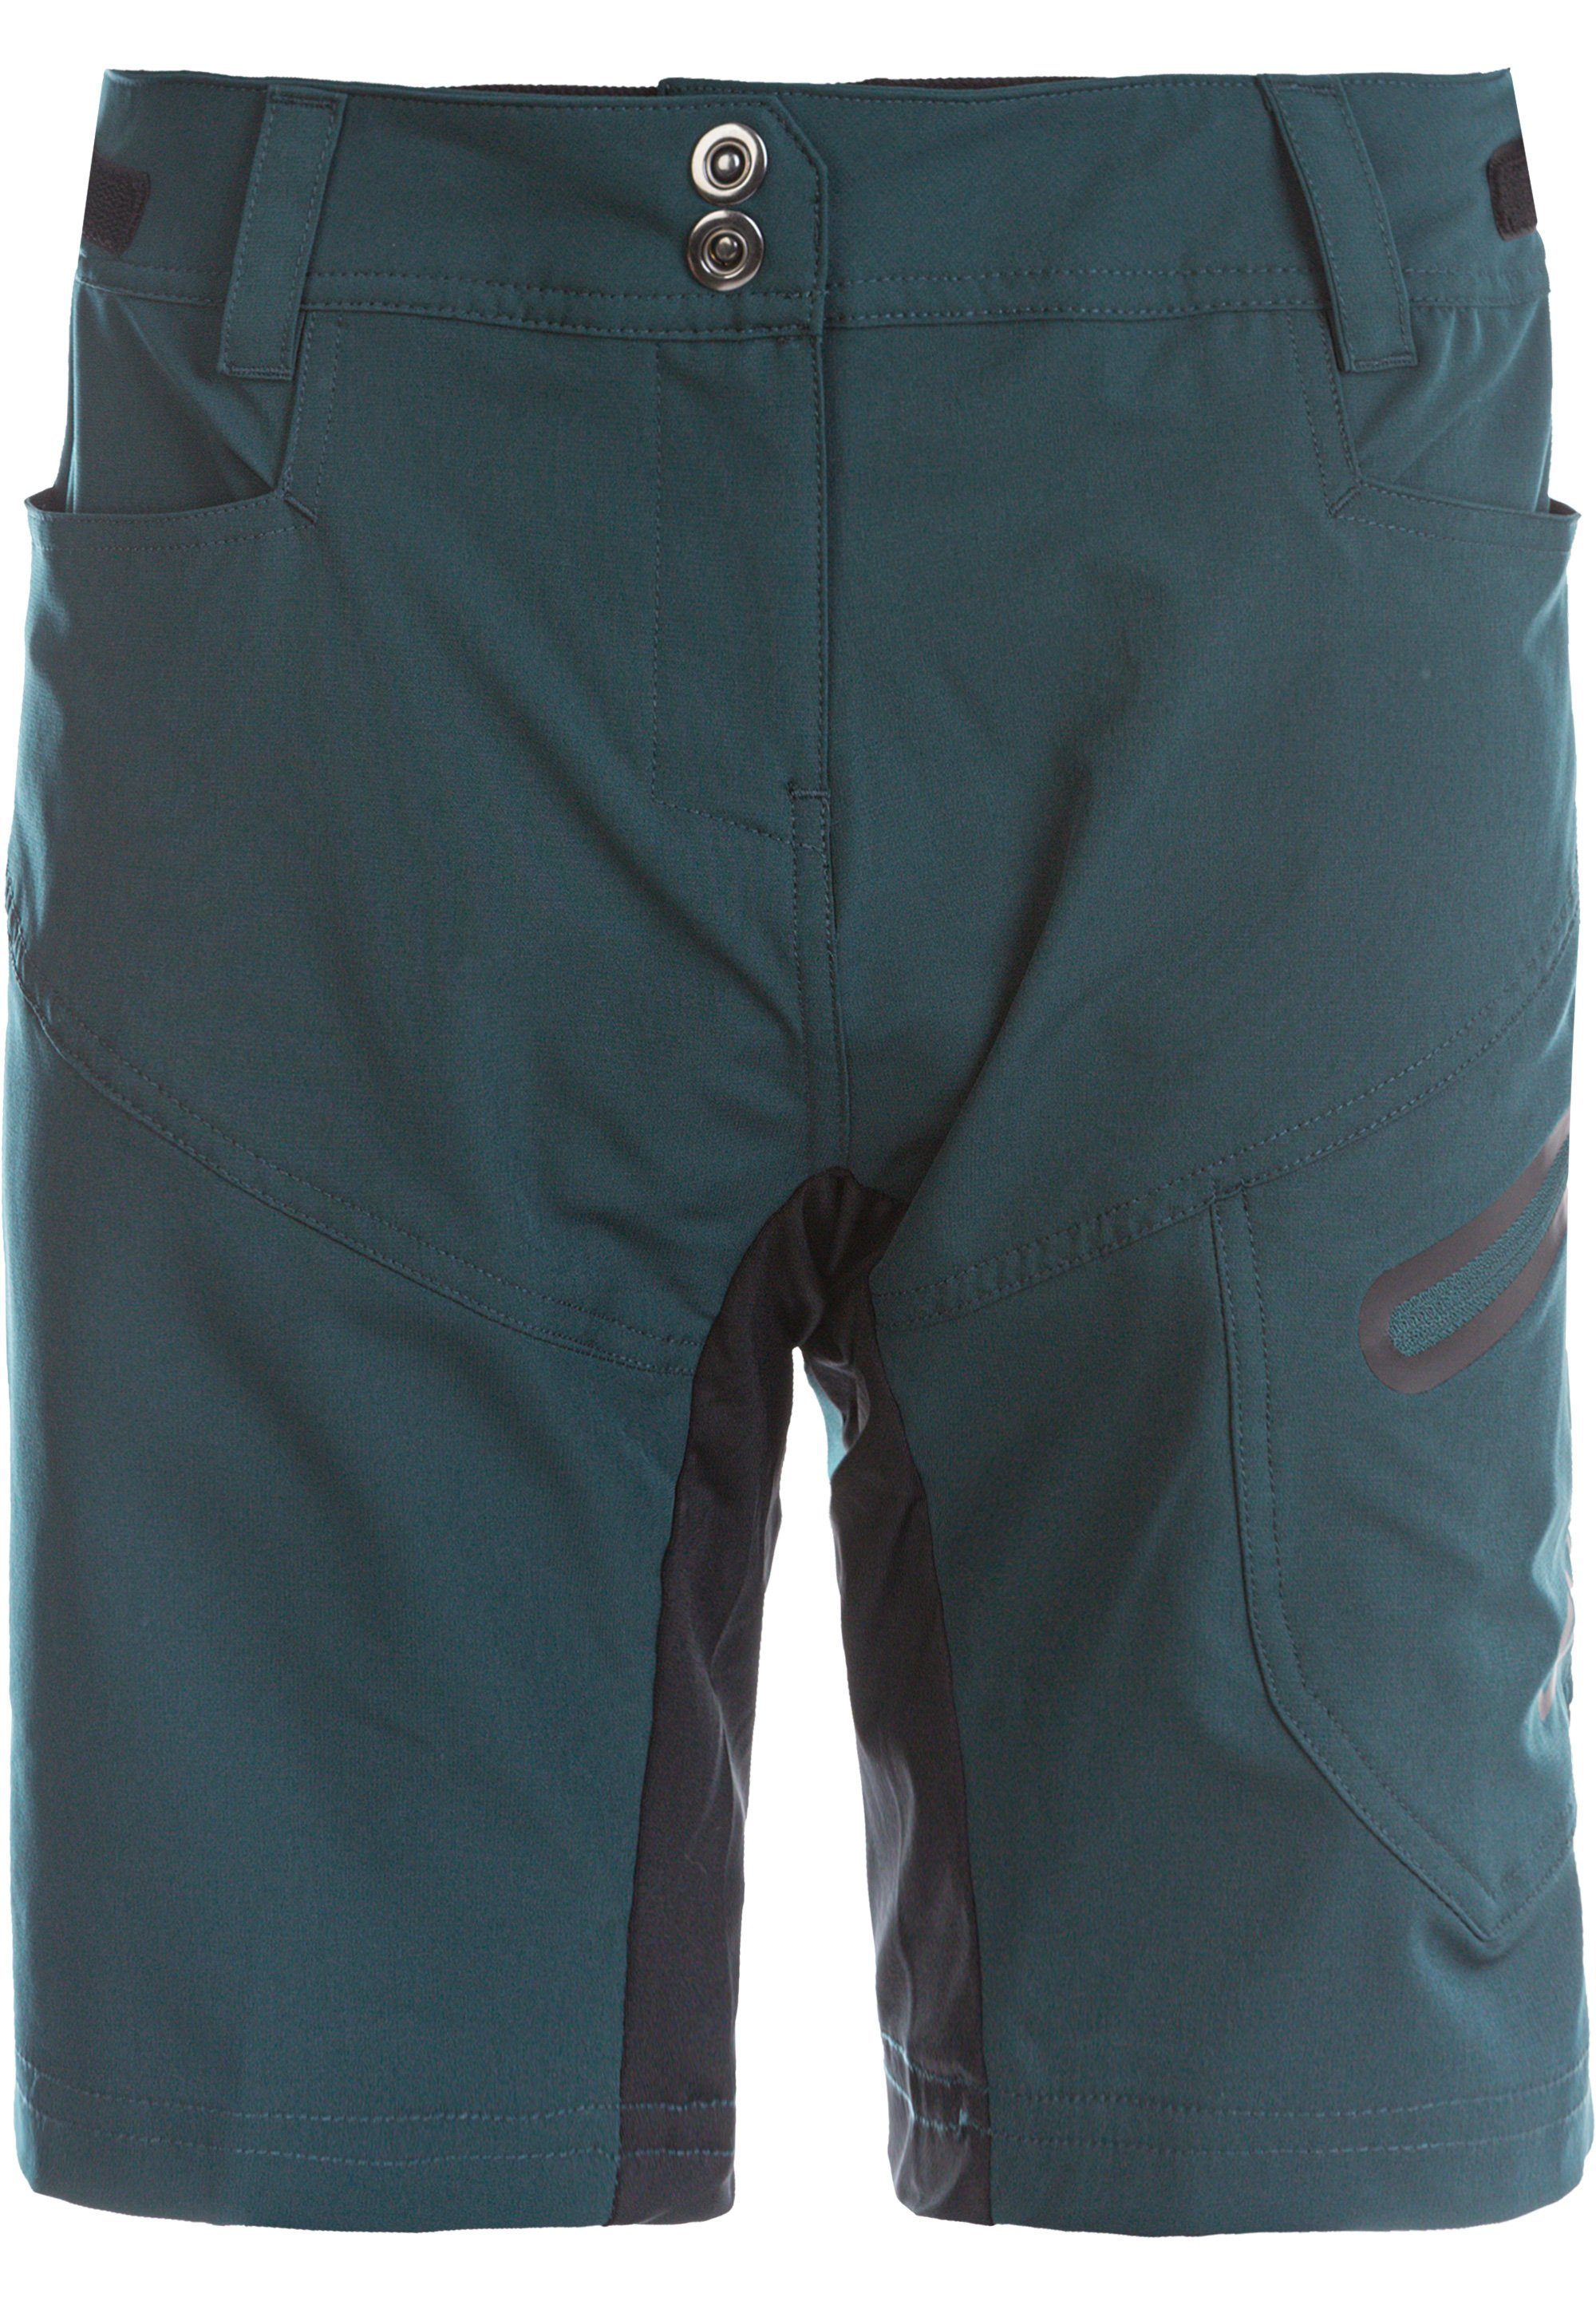 ENDURANCE Radhose Jamilla Shorts Innen-Tights dunkelgrün in 2 herausnehmbarer mit W 1